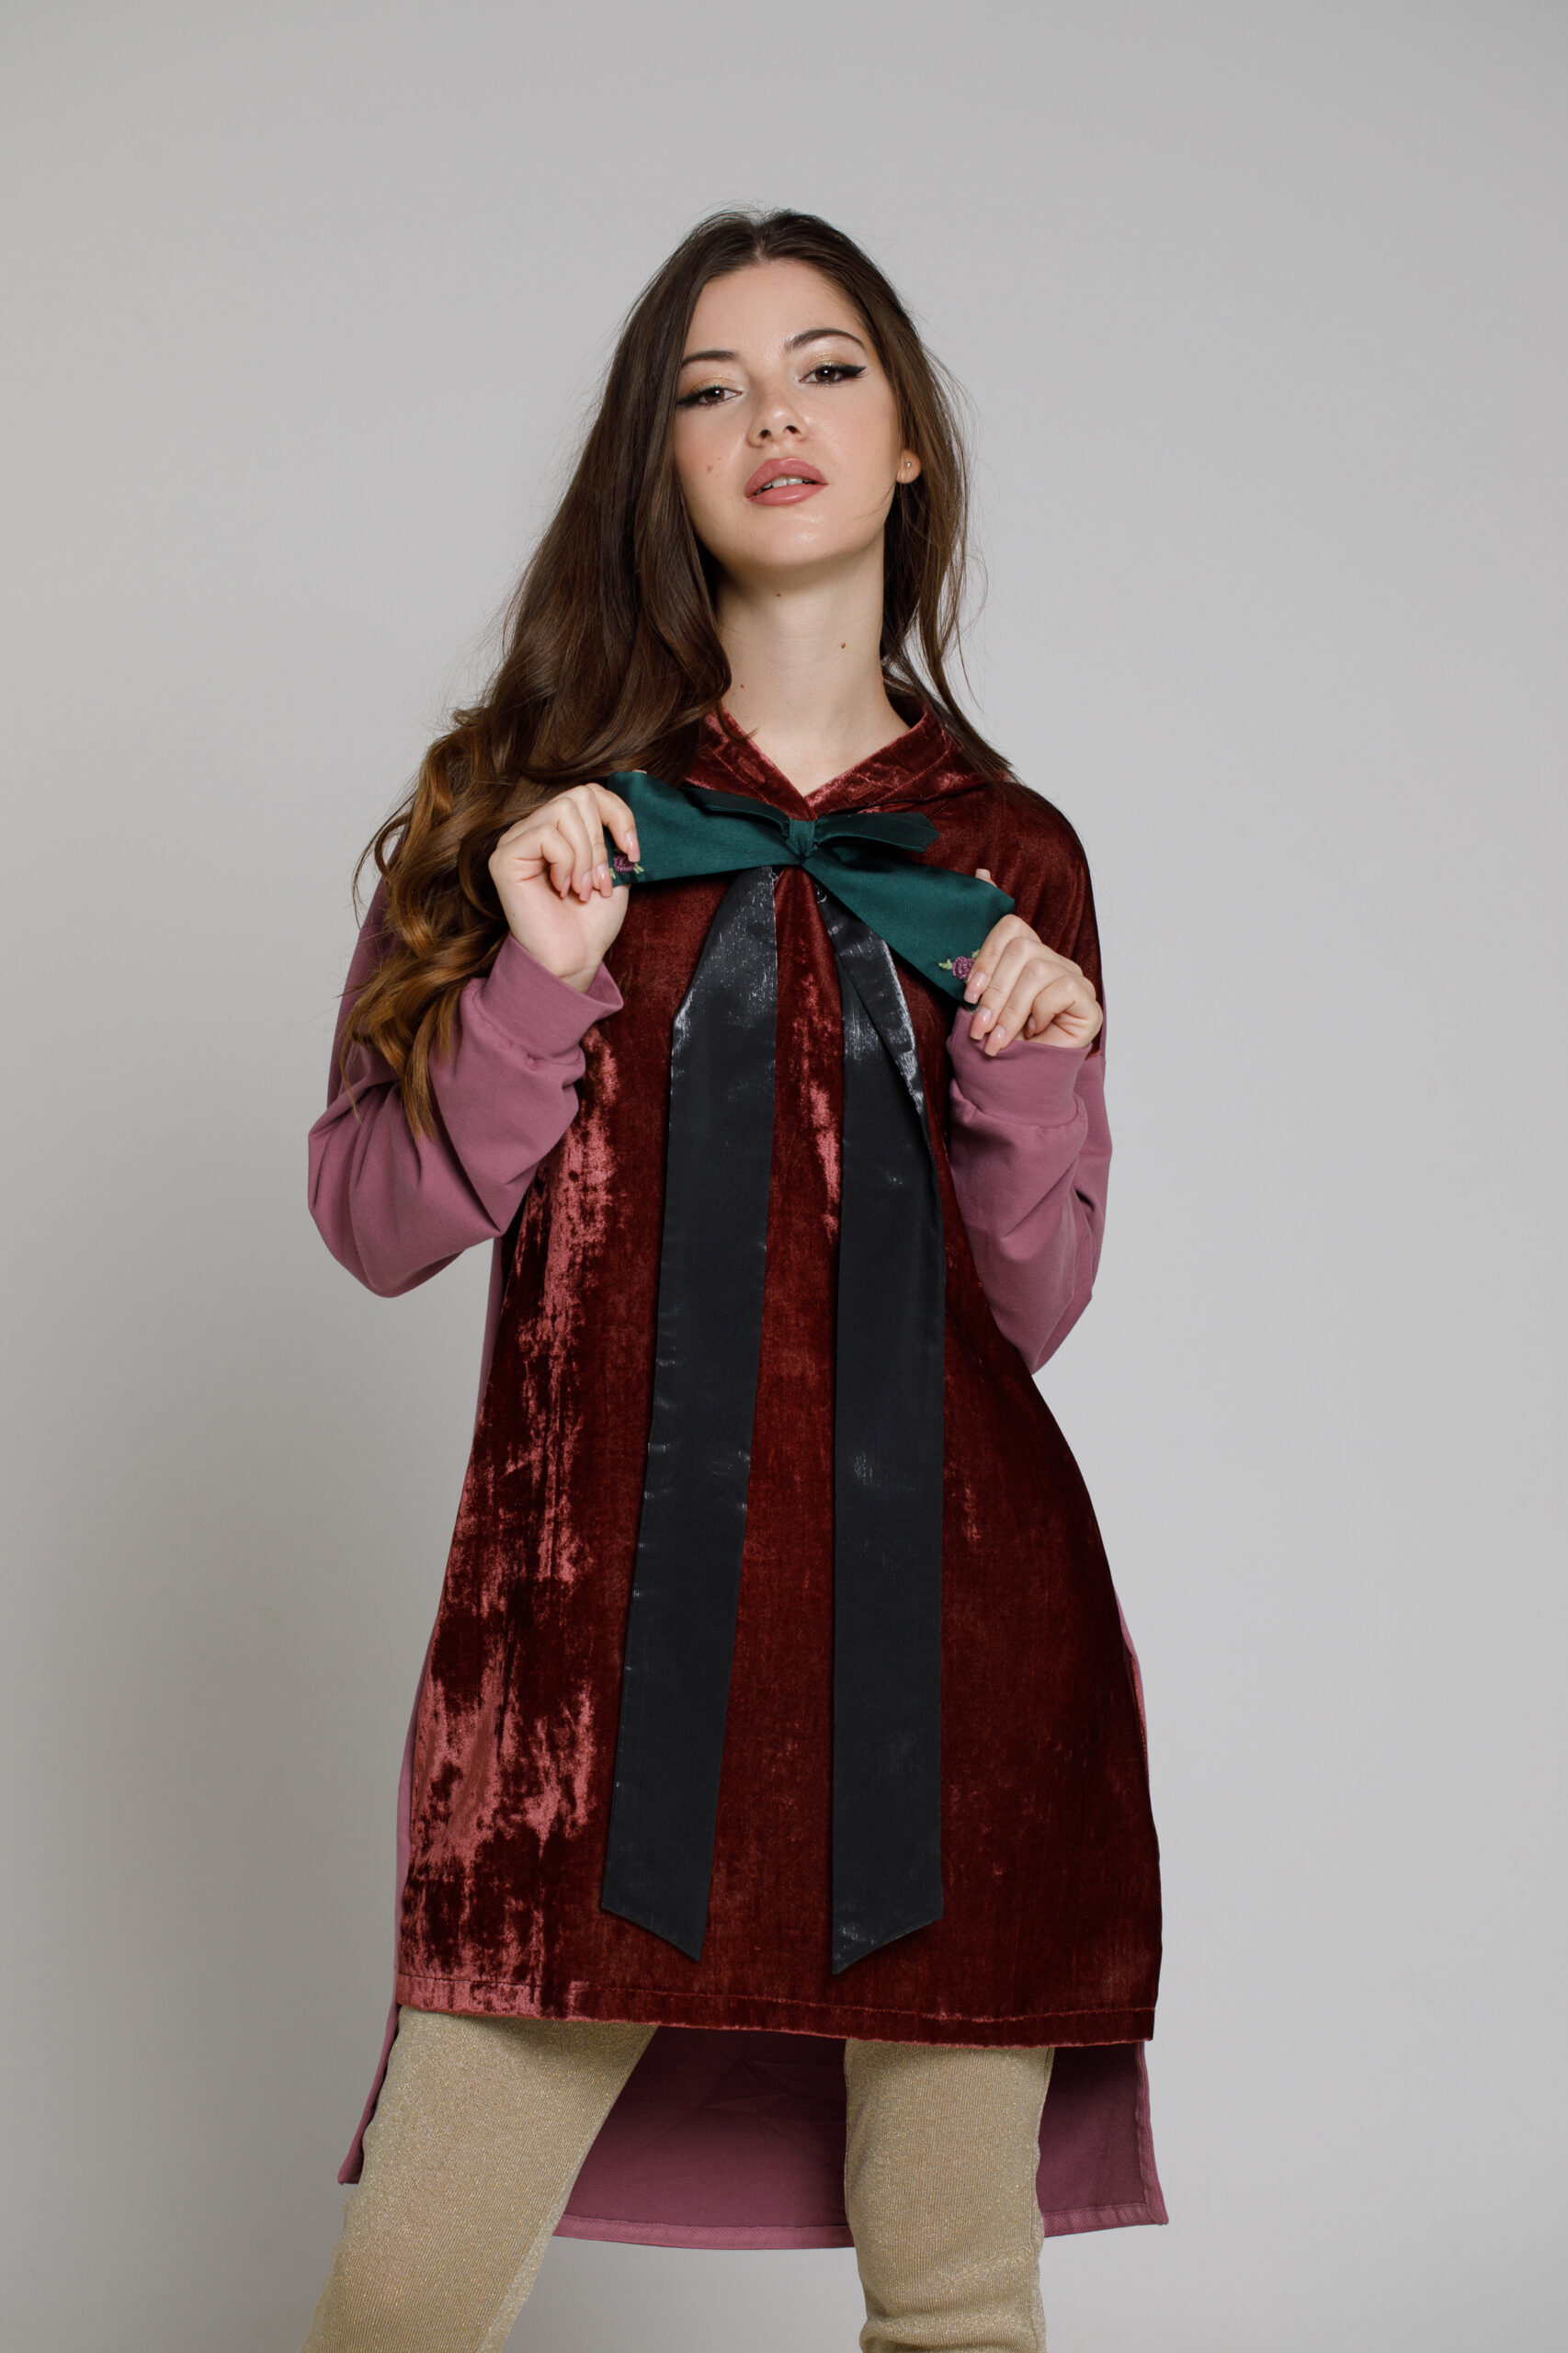 ALARY sweatshirt in burgundy velvet. Natural fabrics, original design, handmade embroidery